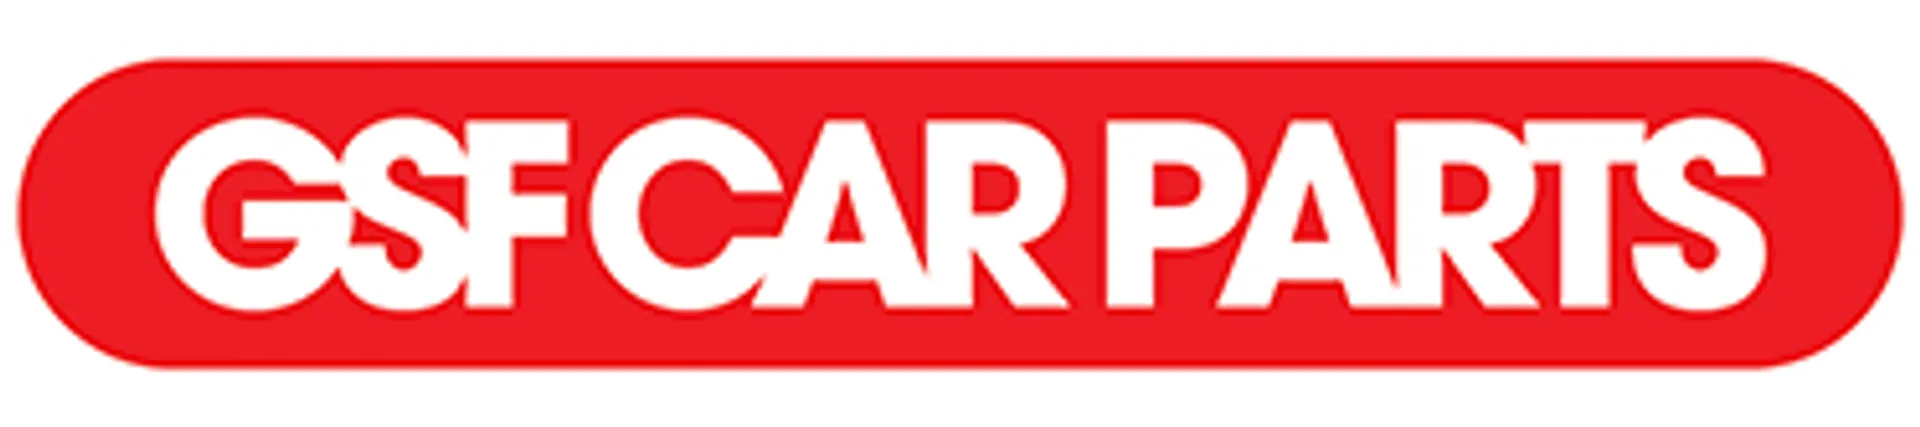 GSF CAR PARTS logo